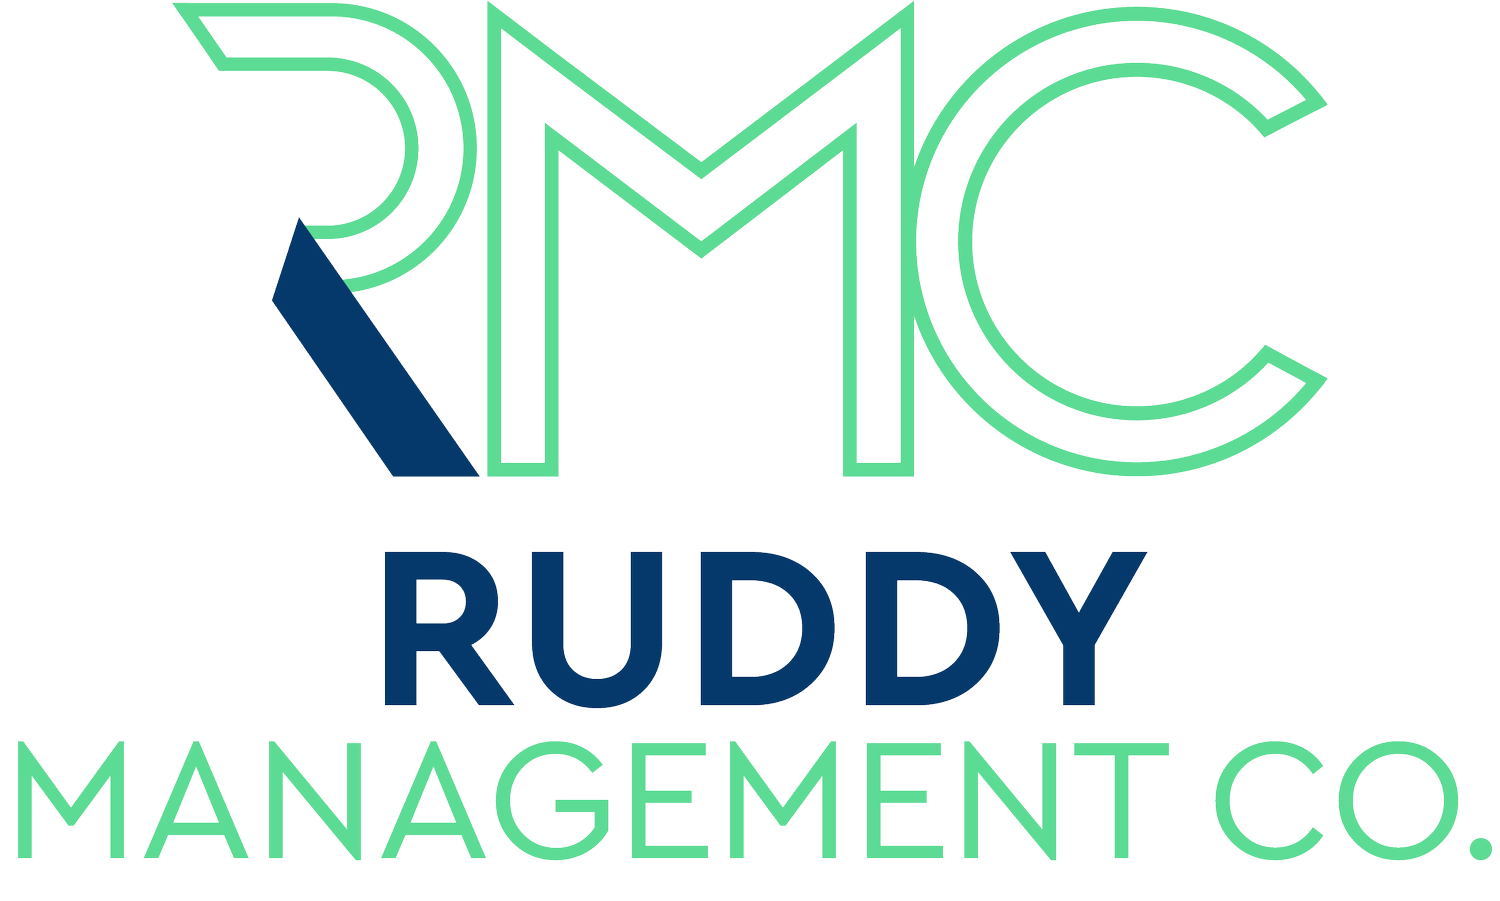 Ruddy Management Co.